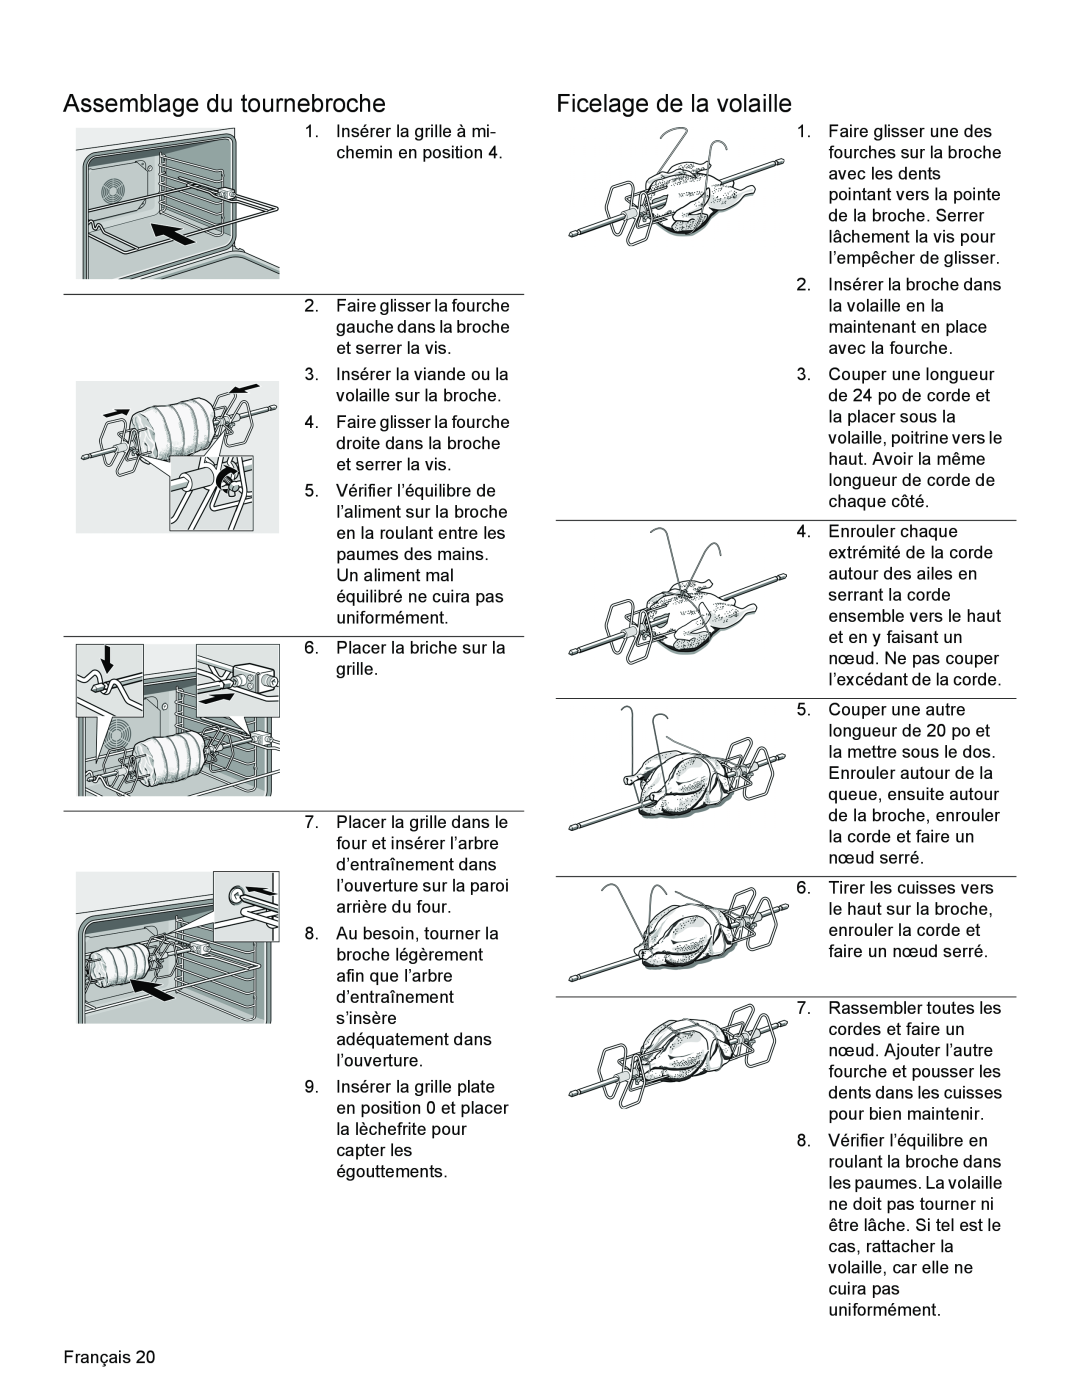 Thermador PODMW301, PODM301 manual Assemblage du tournebroche, Ficelage de la volaille 